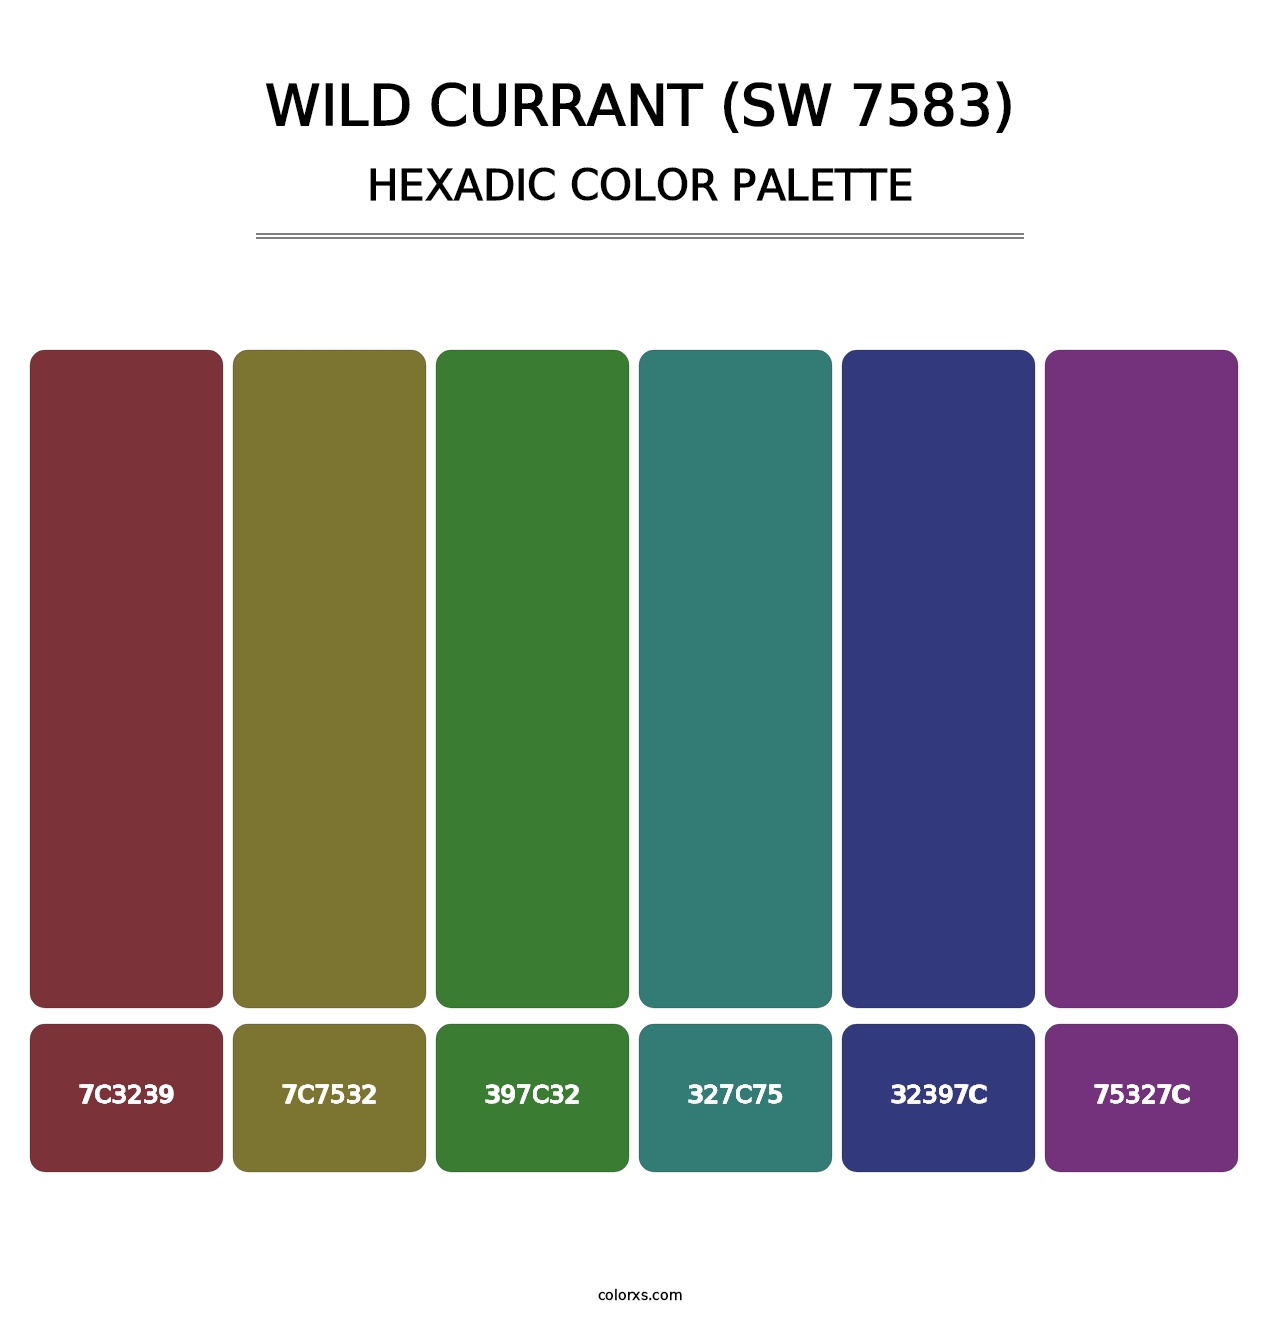 Wild Currant (SW 7583) - Hexadic Color Palette